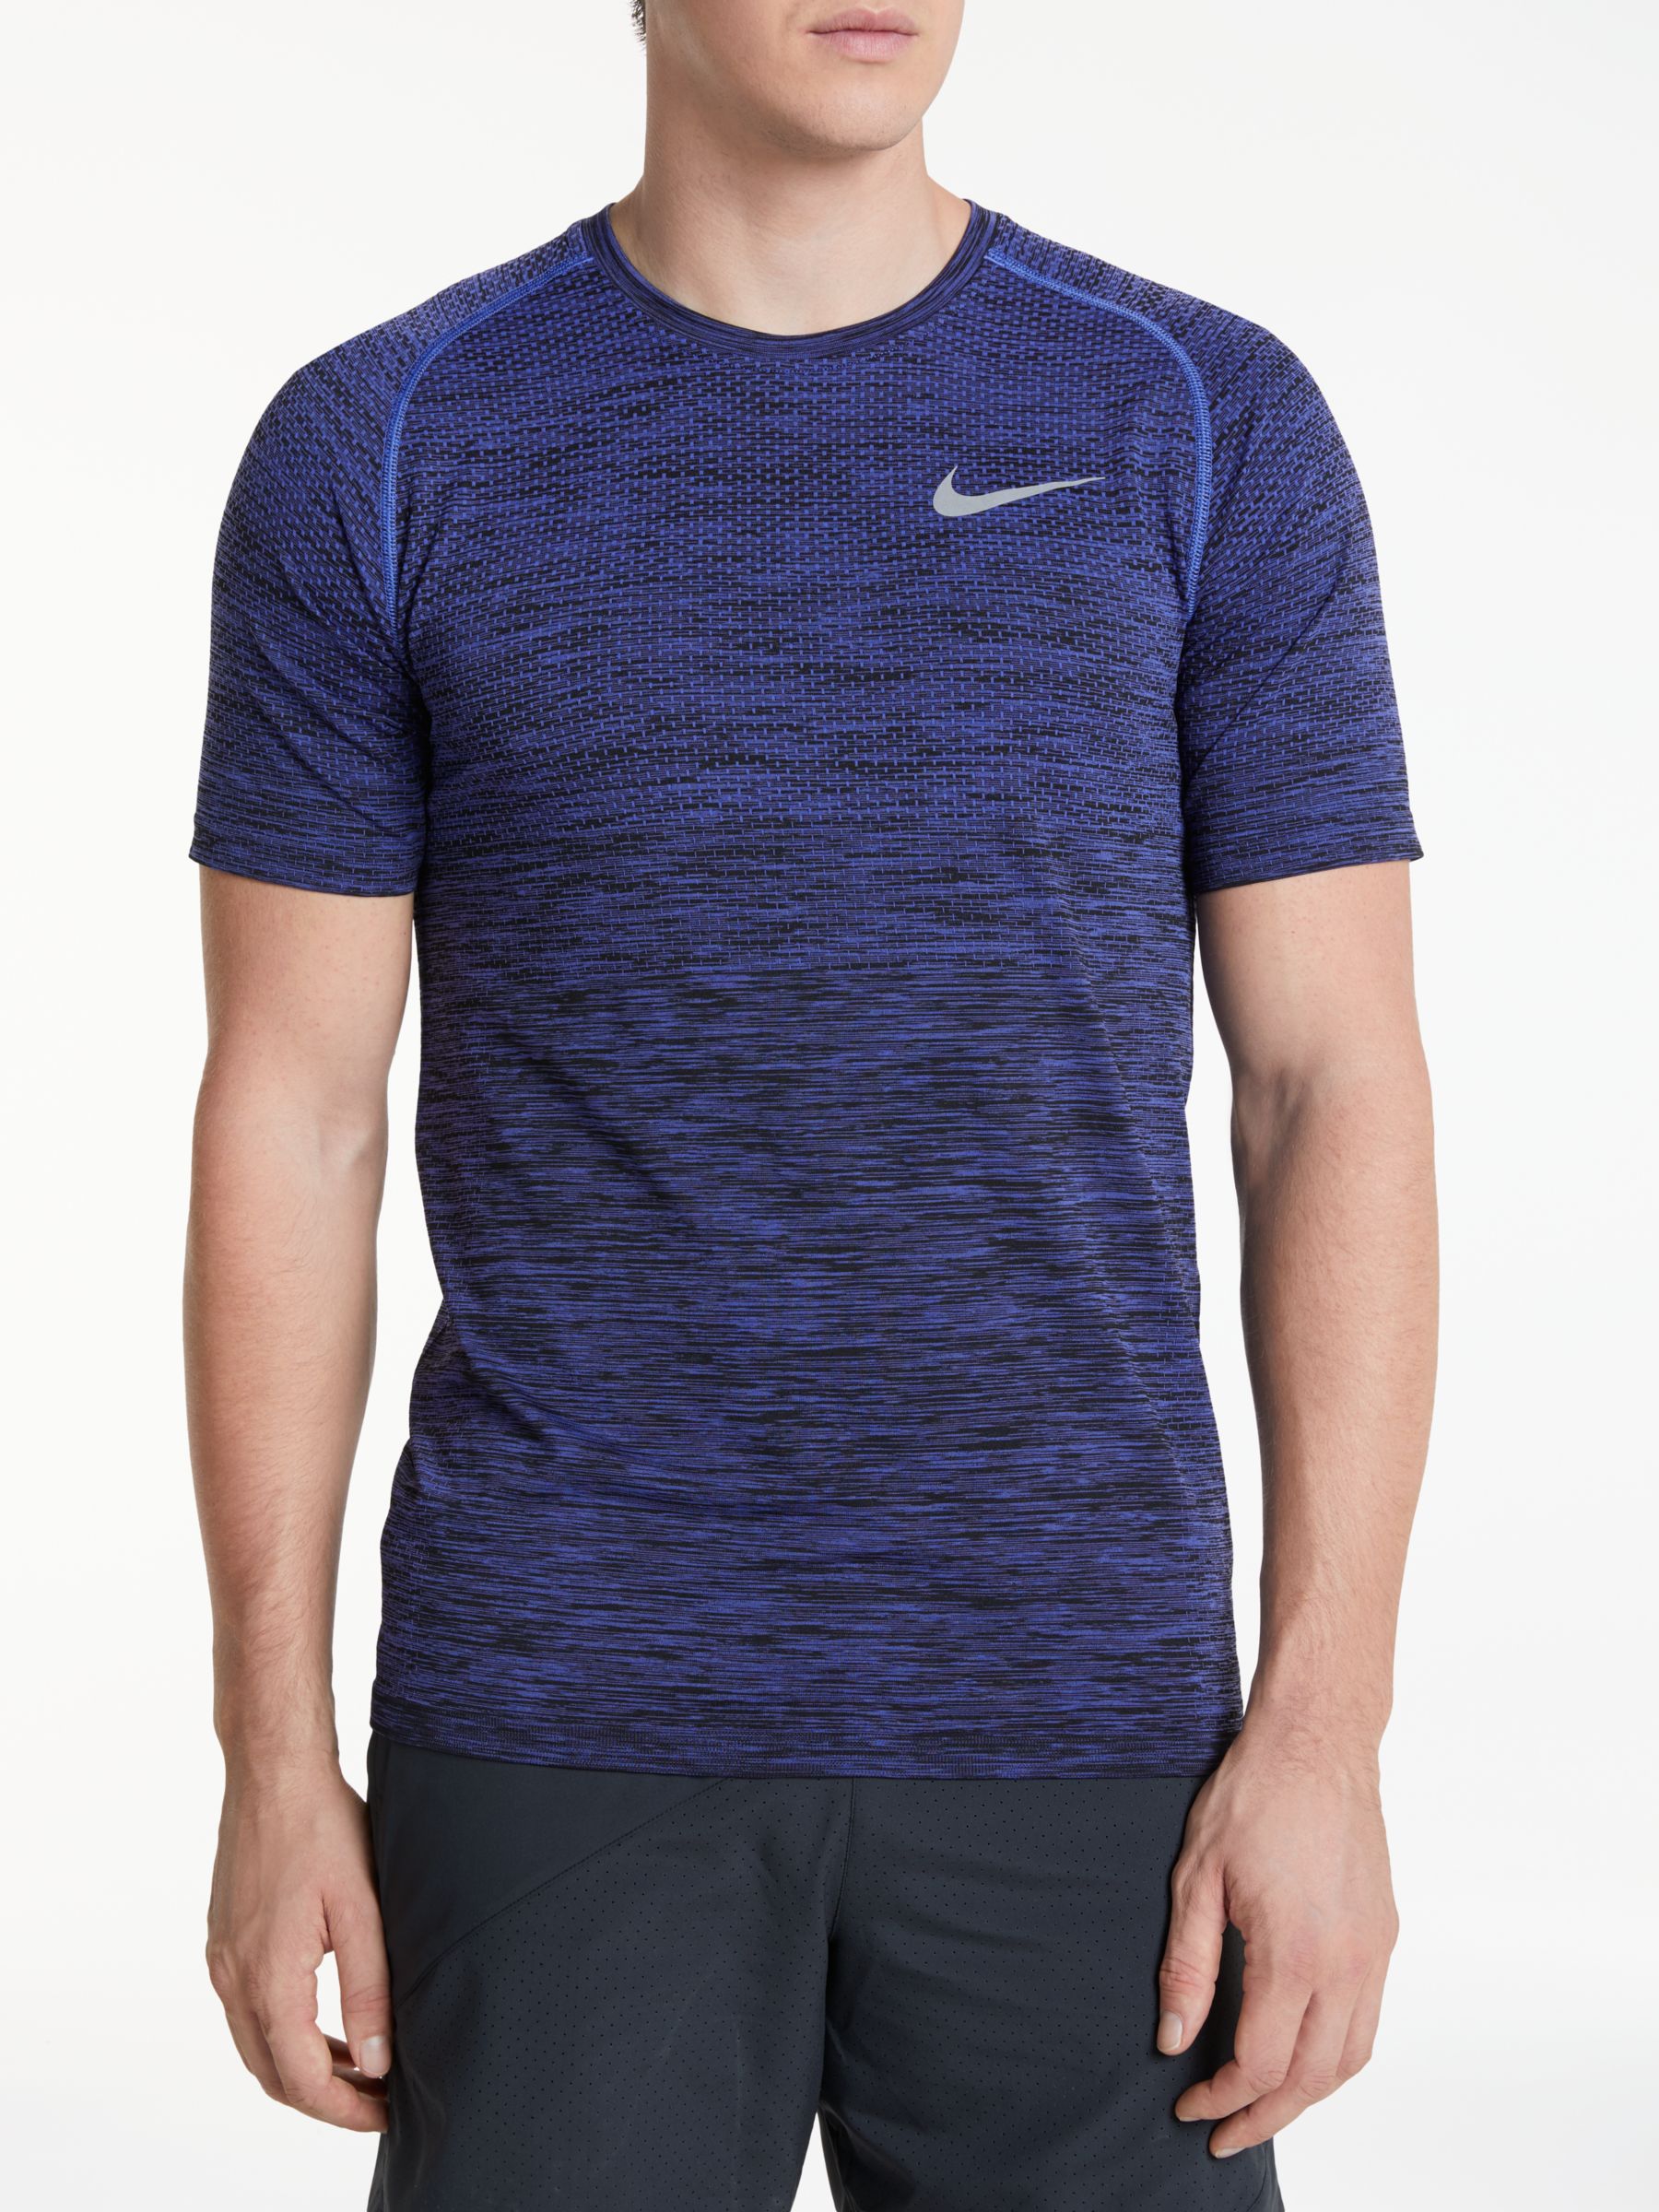 zebra klon Passiv Nike Dri-FIT Knit Short Sleeve Running T-Shirt, Purple Comet/Black